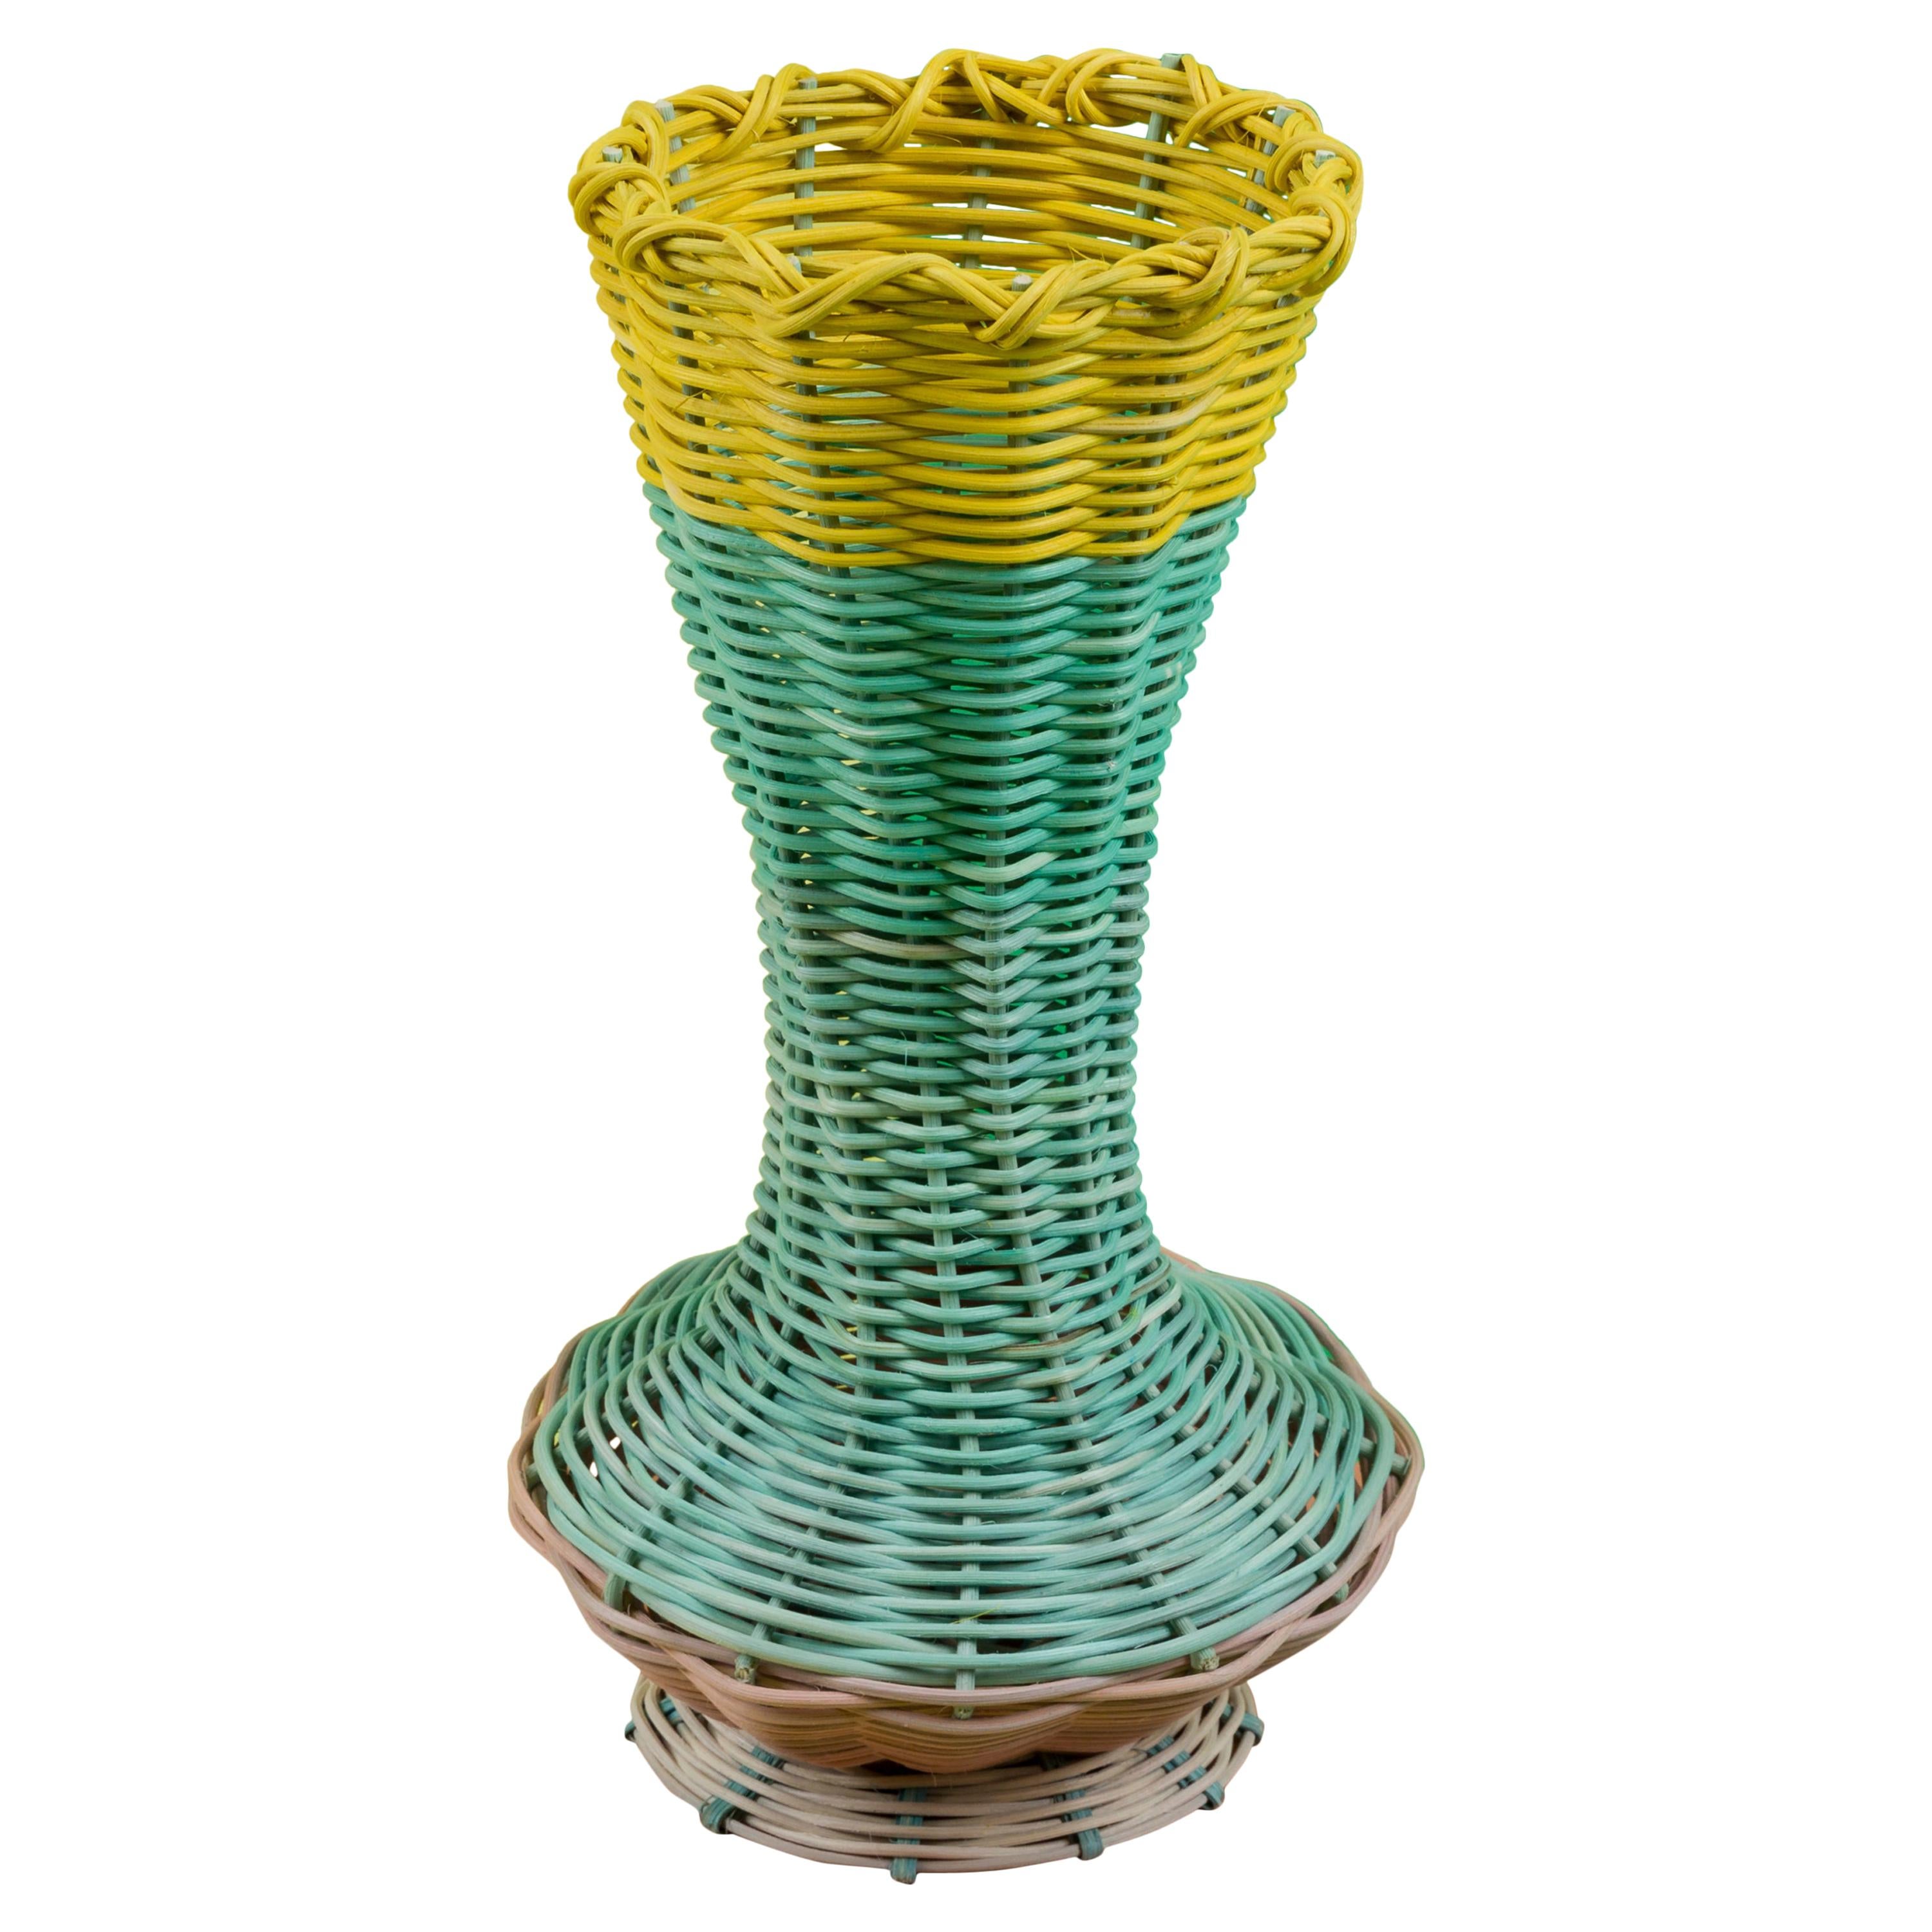 Decanter Vase Woven in Emerald, Lemon + Tan by Studio Herron